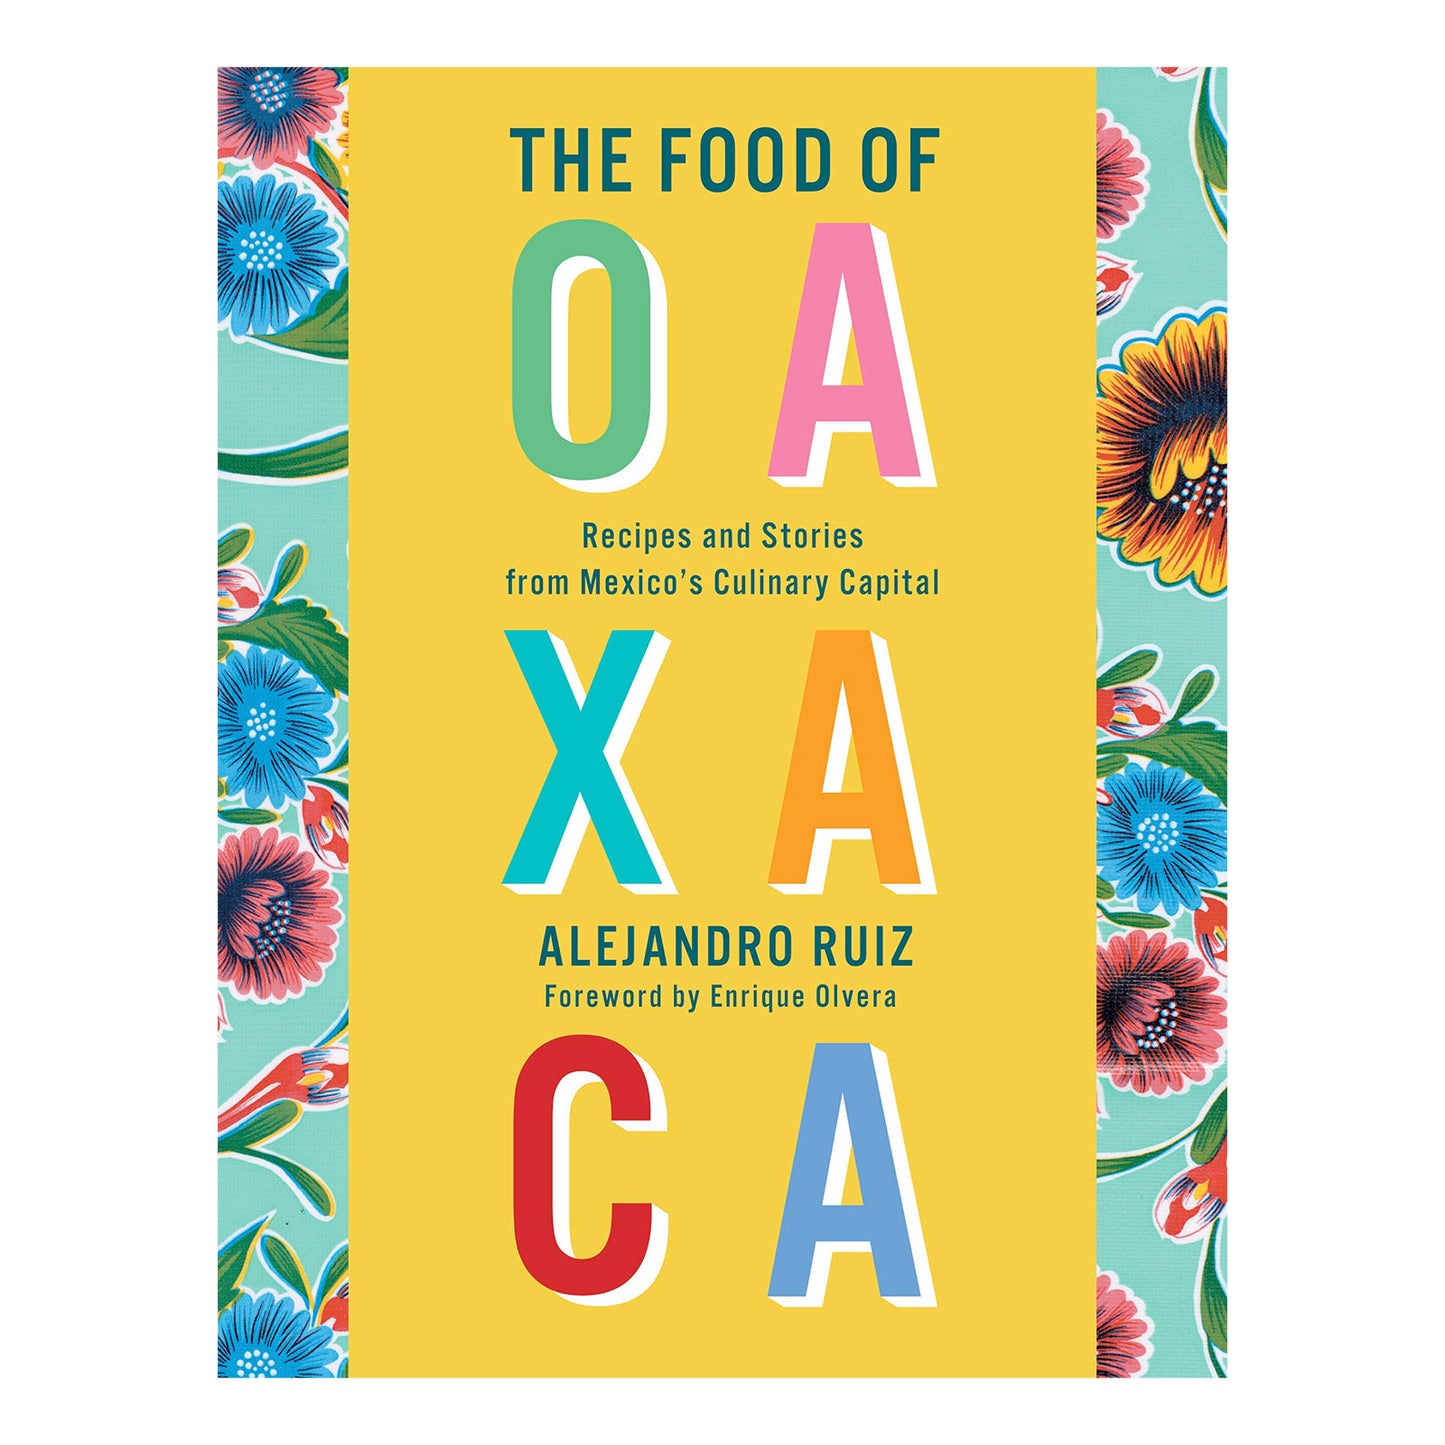 The Food of Oaxaca: Recipes and Stories from Mexico's Culinary Capital by Alejandro Ruiz